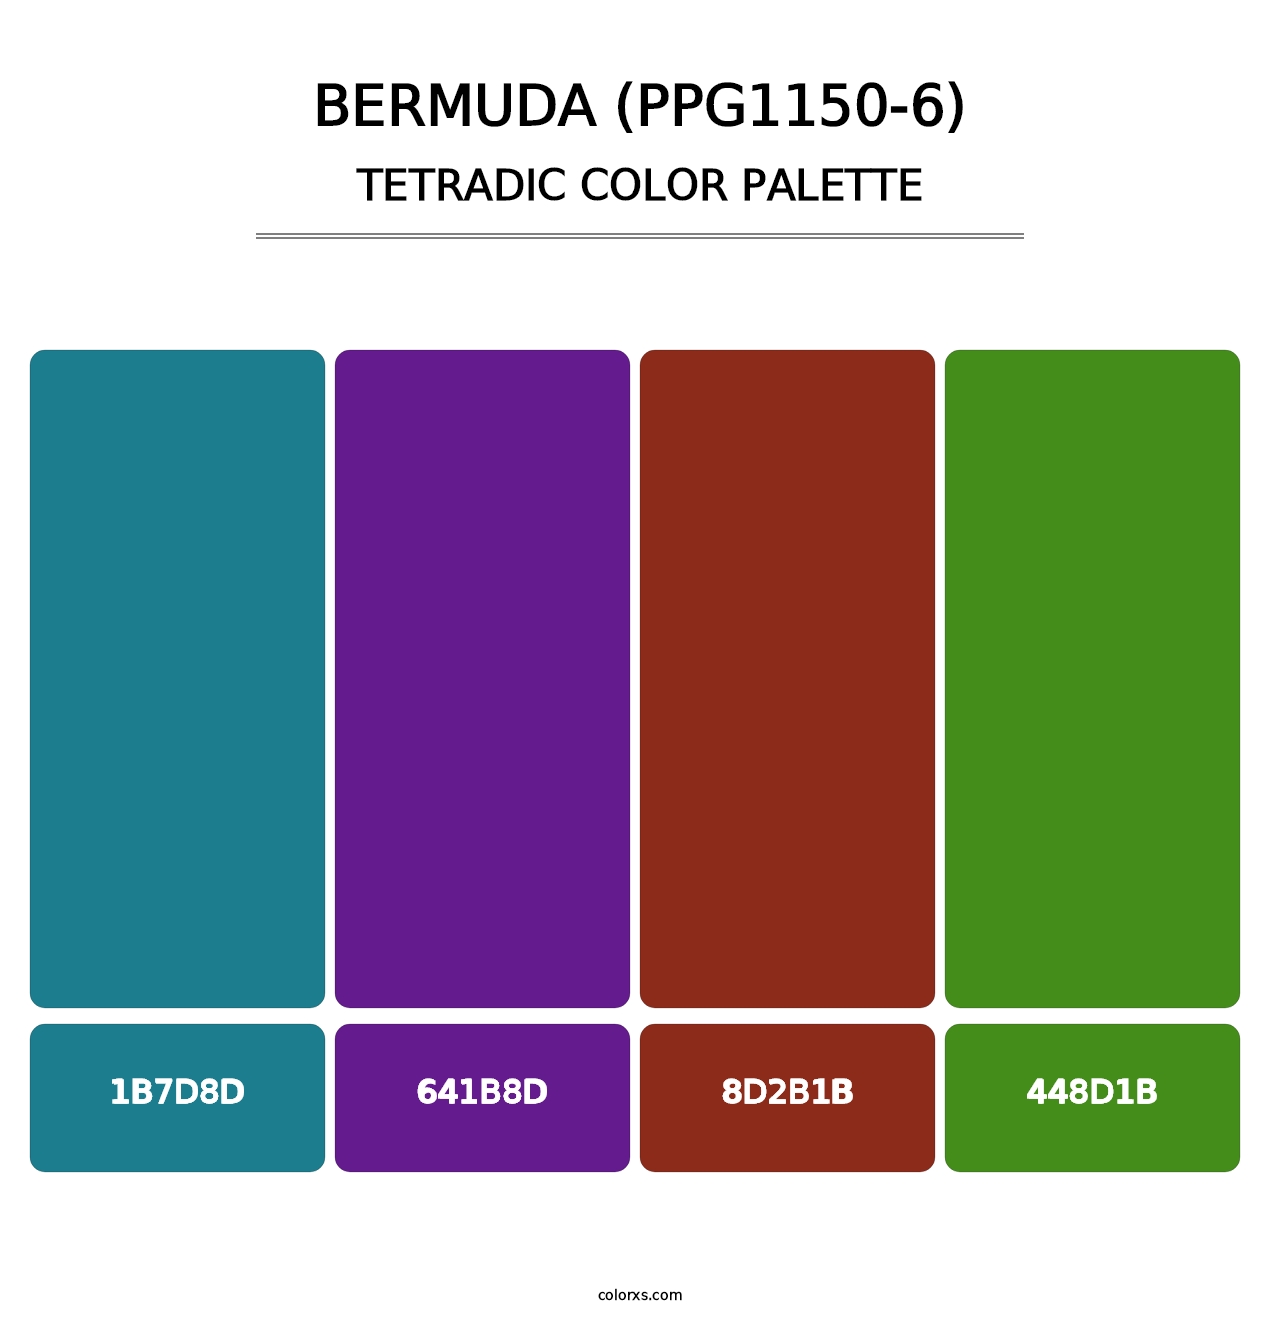 Bermuda (PPG1150-6) - Tetradic Color Palette